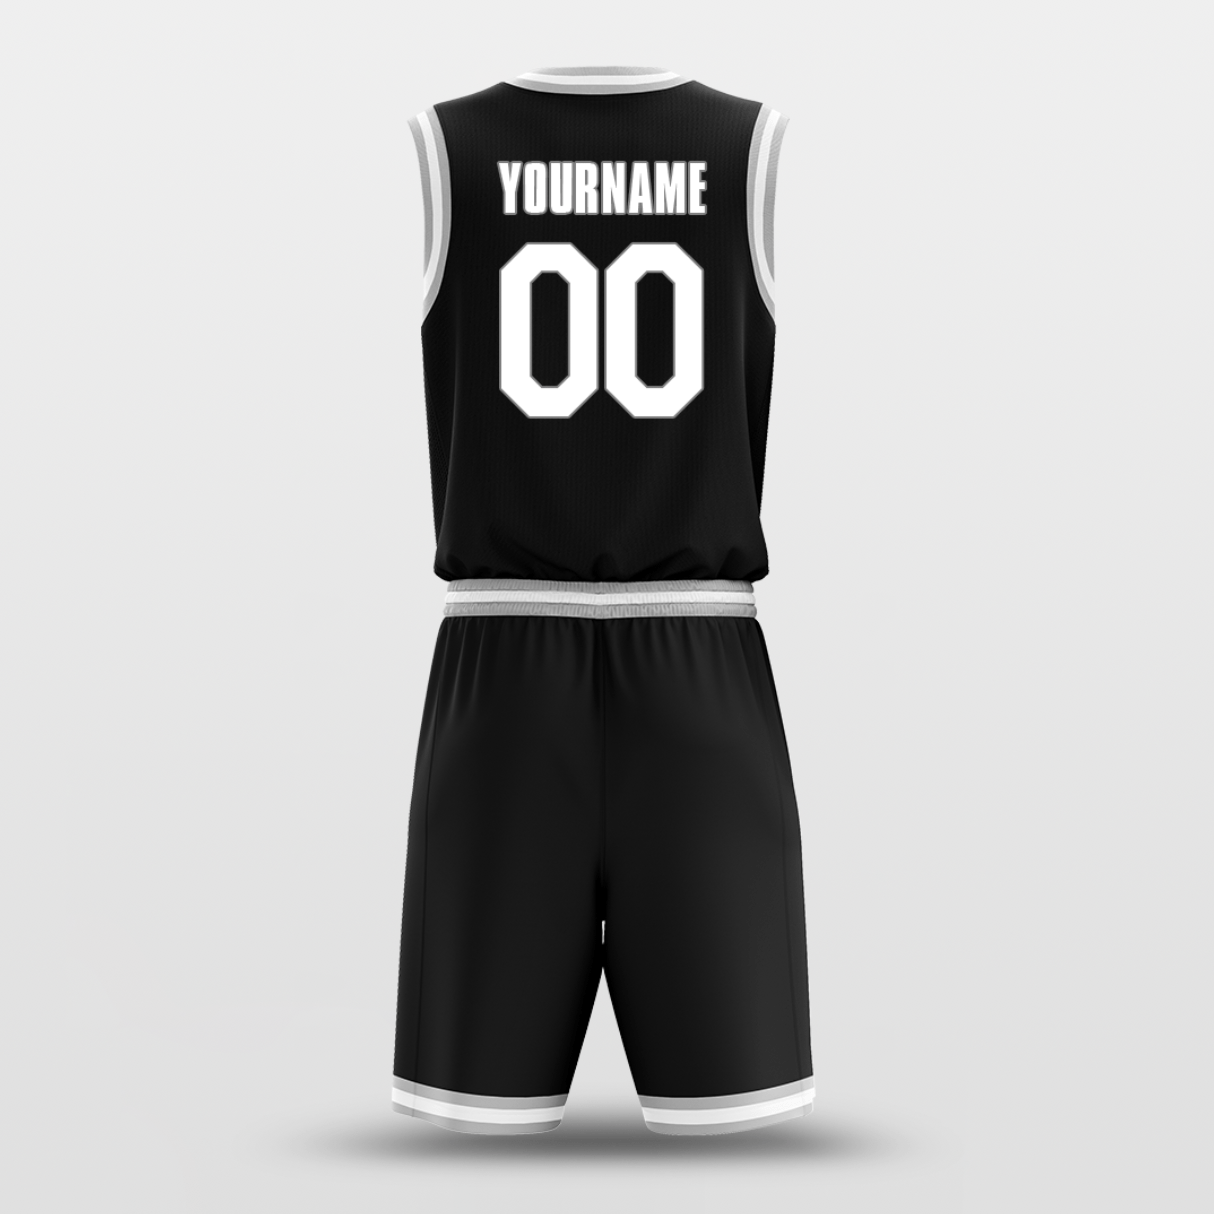 Gray White - Custom Basketball Jersey Design for Team-XTeamwear